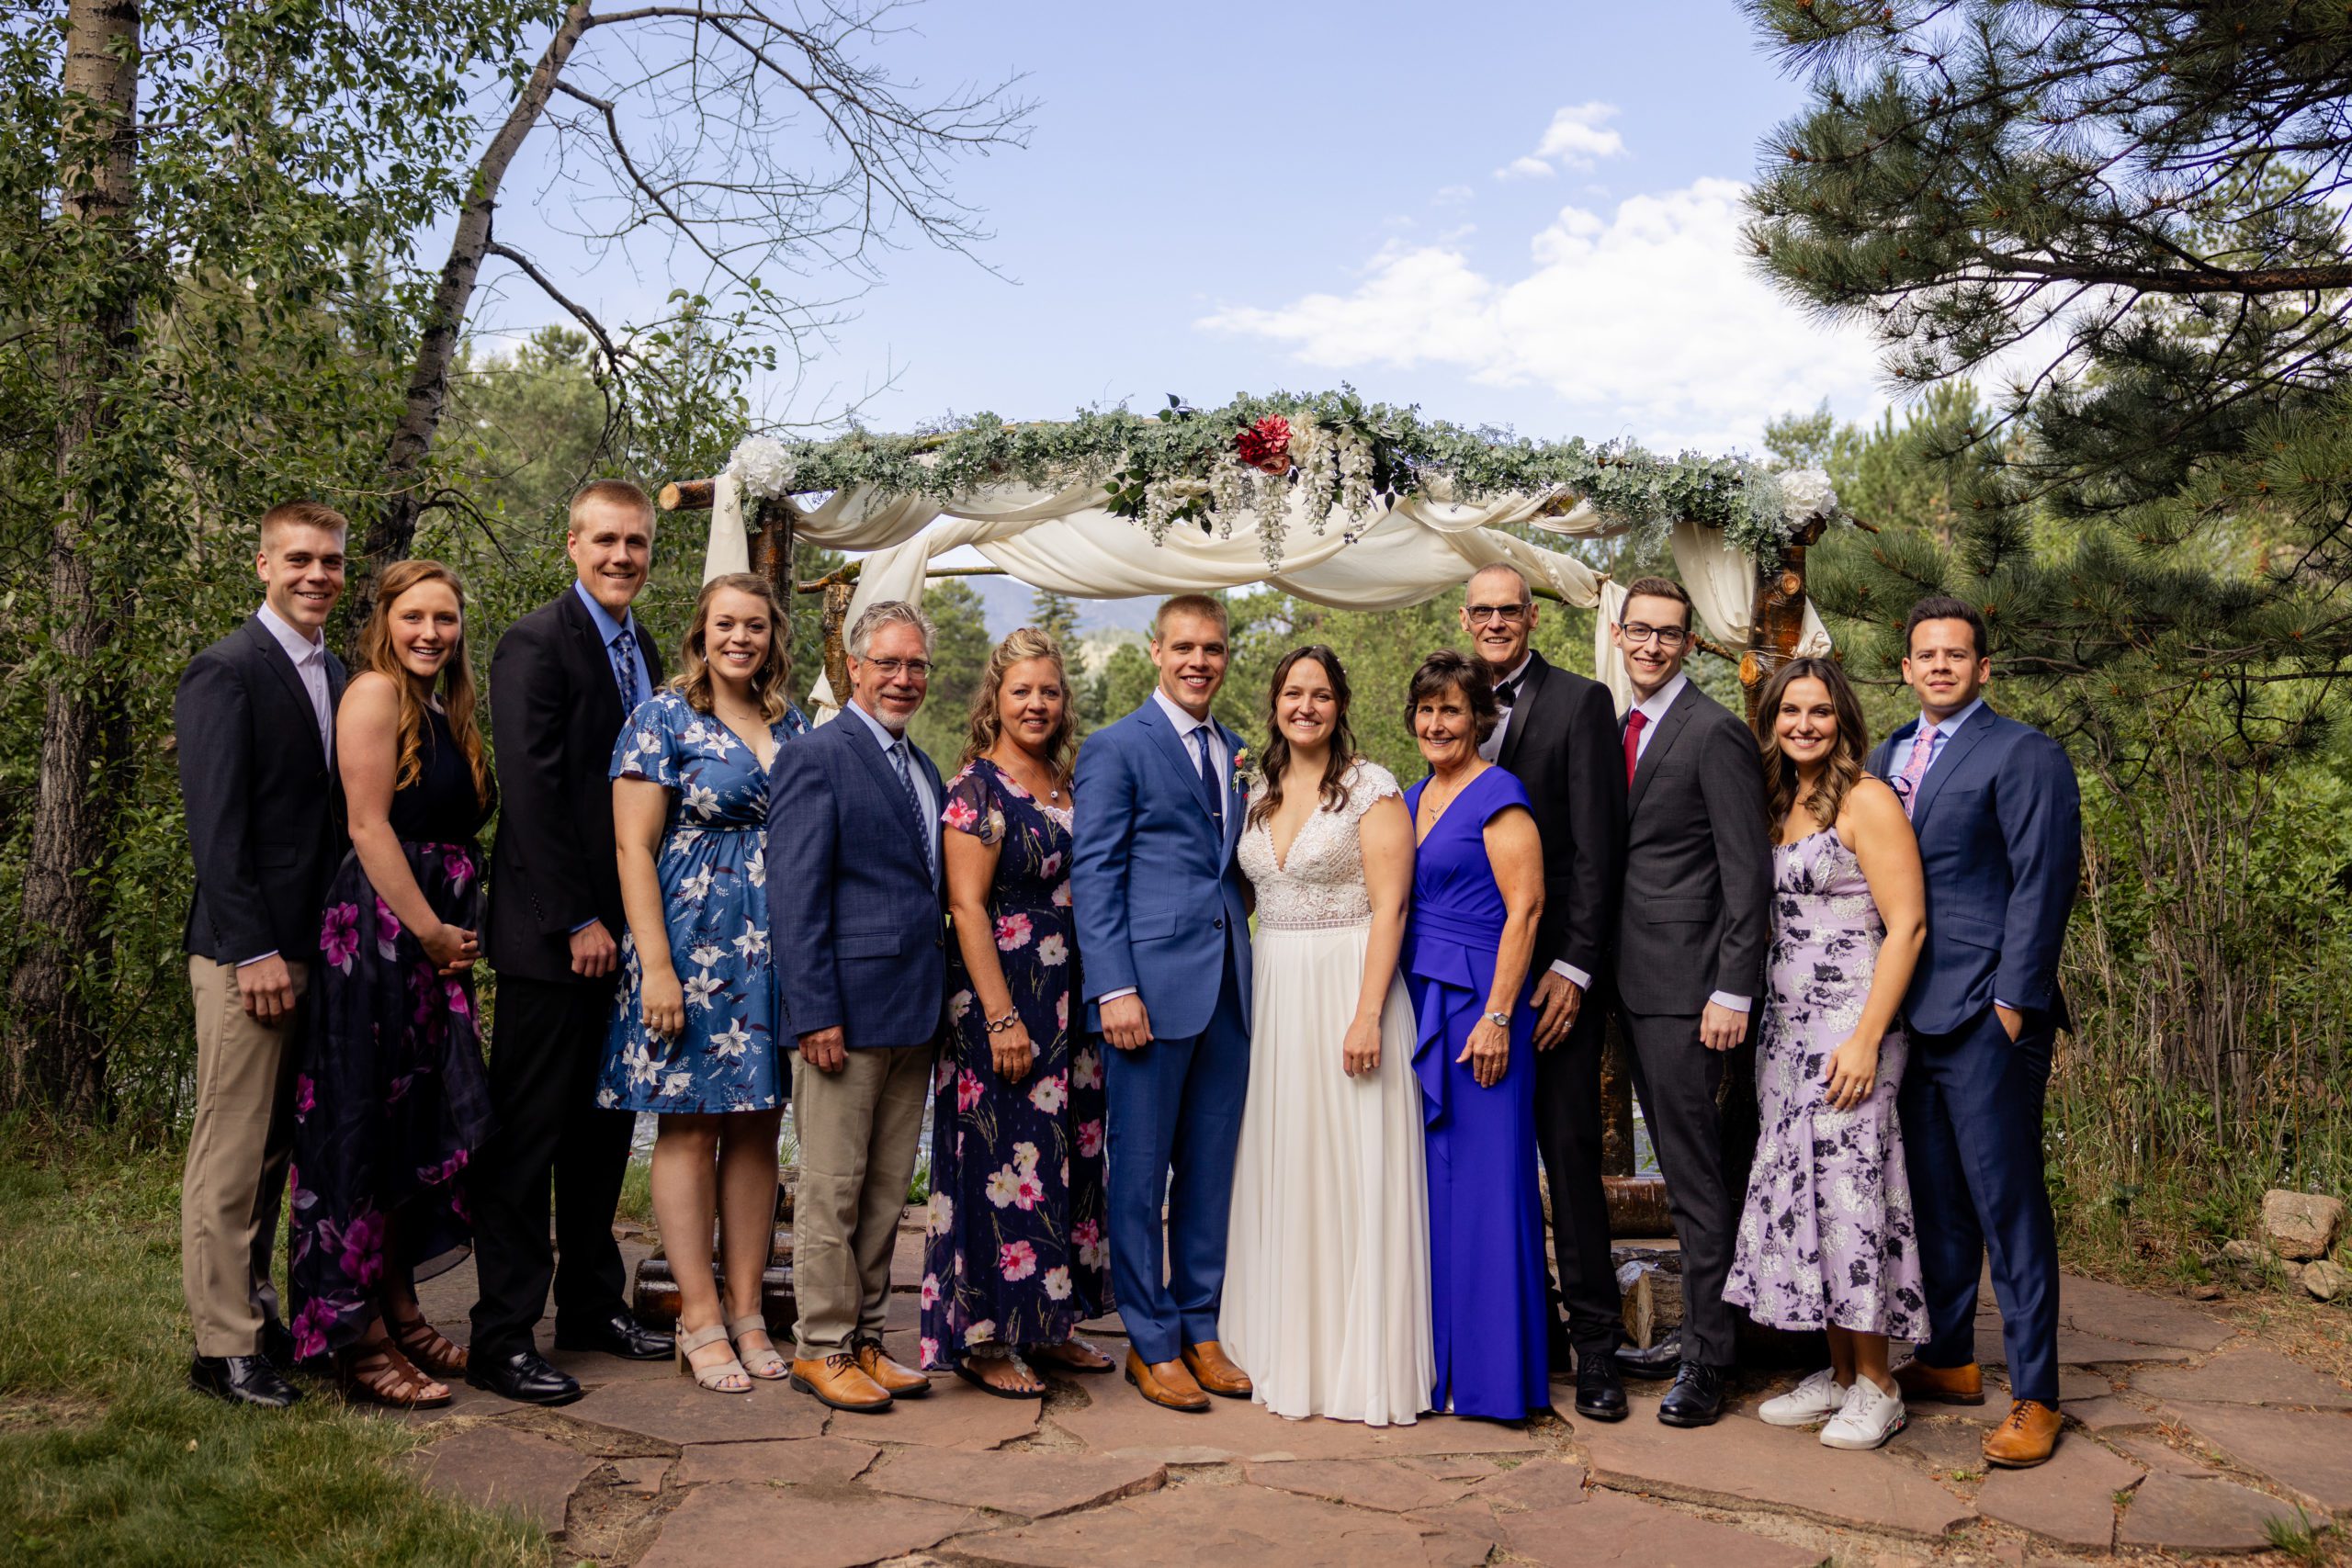 Both families at their wedding reception at Romantic RiverSong Inn in Estes Park.